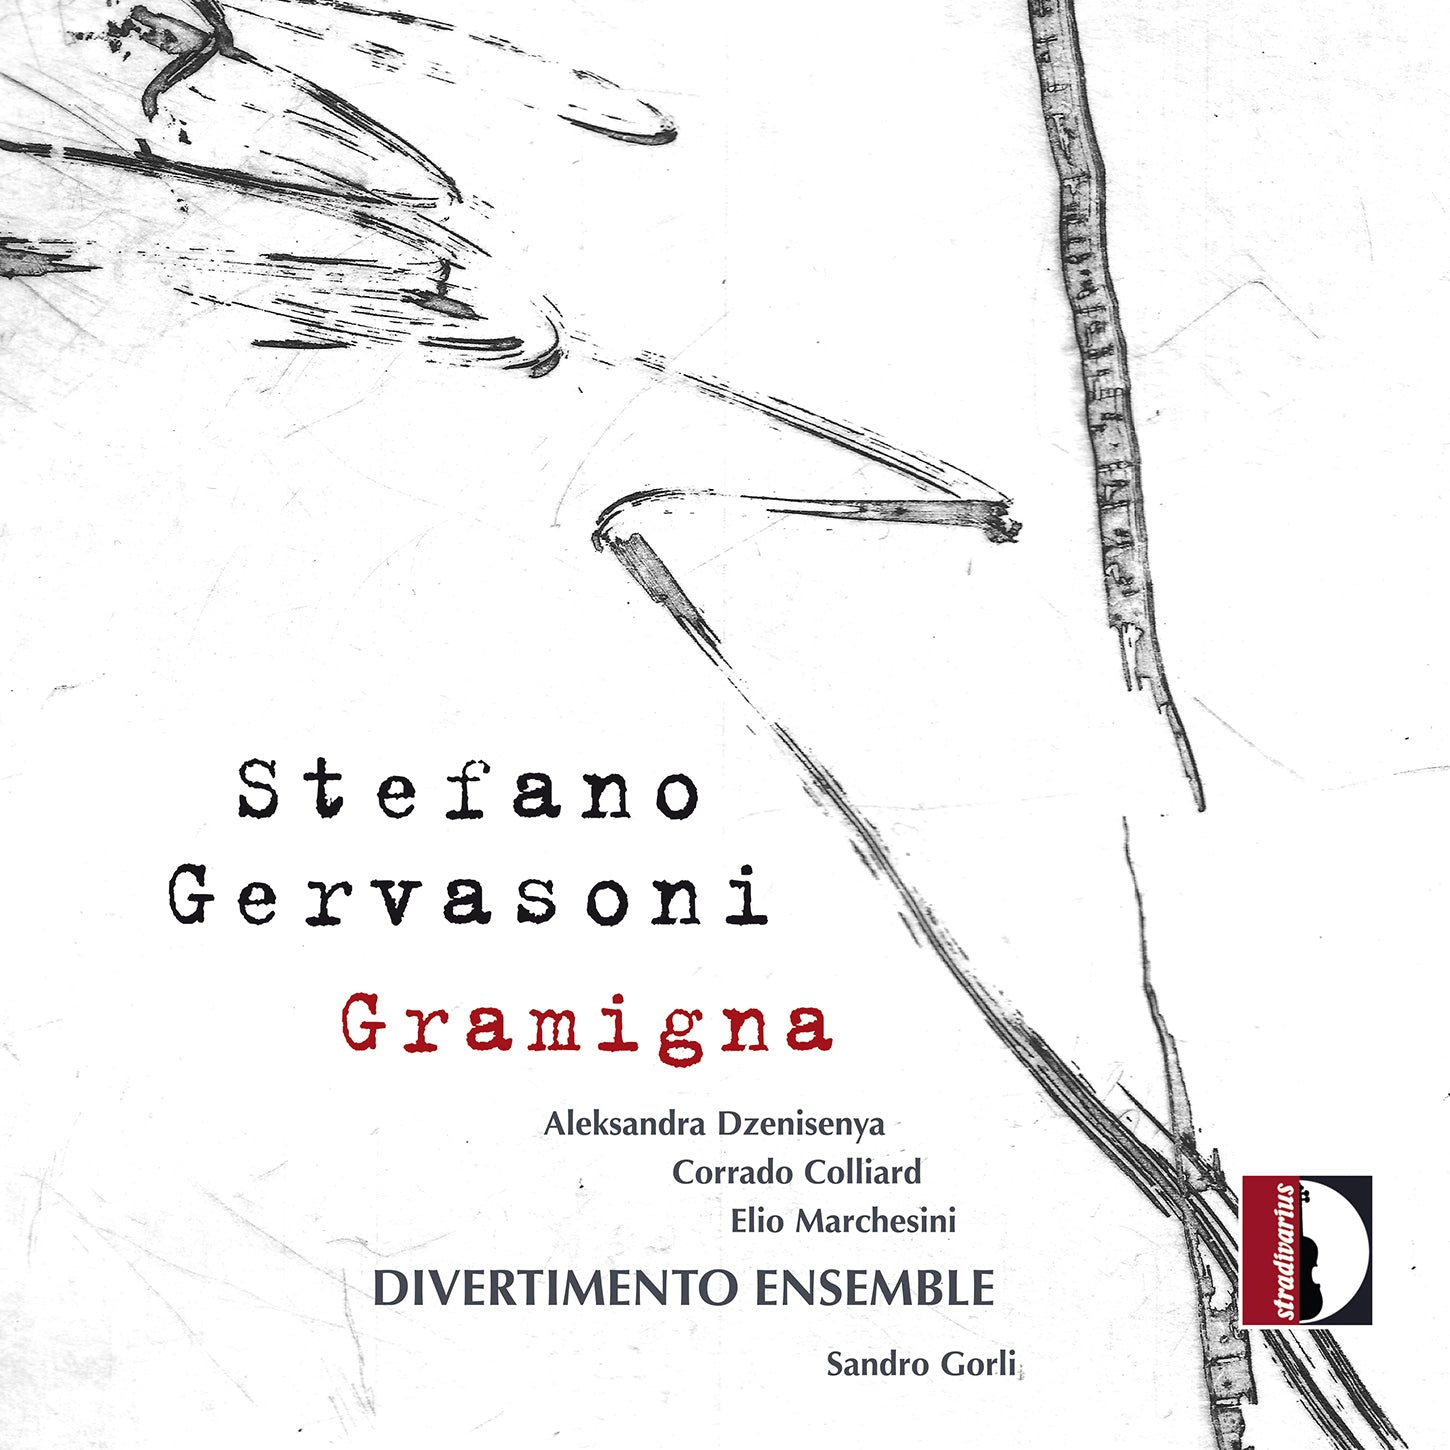 Gervasoni: Gramigna / Colliard, Dzenisenya, Marchesini, Gorli, Divertimento Ensemble